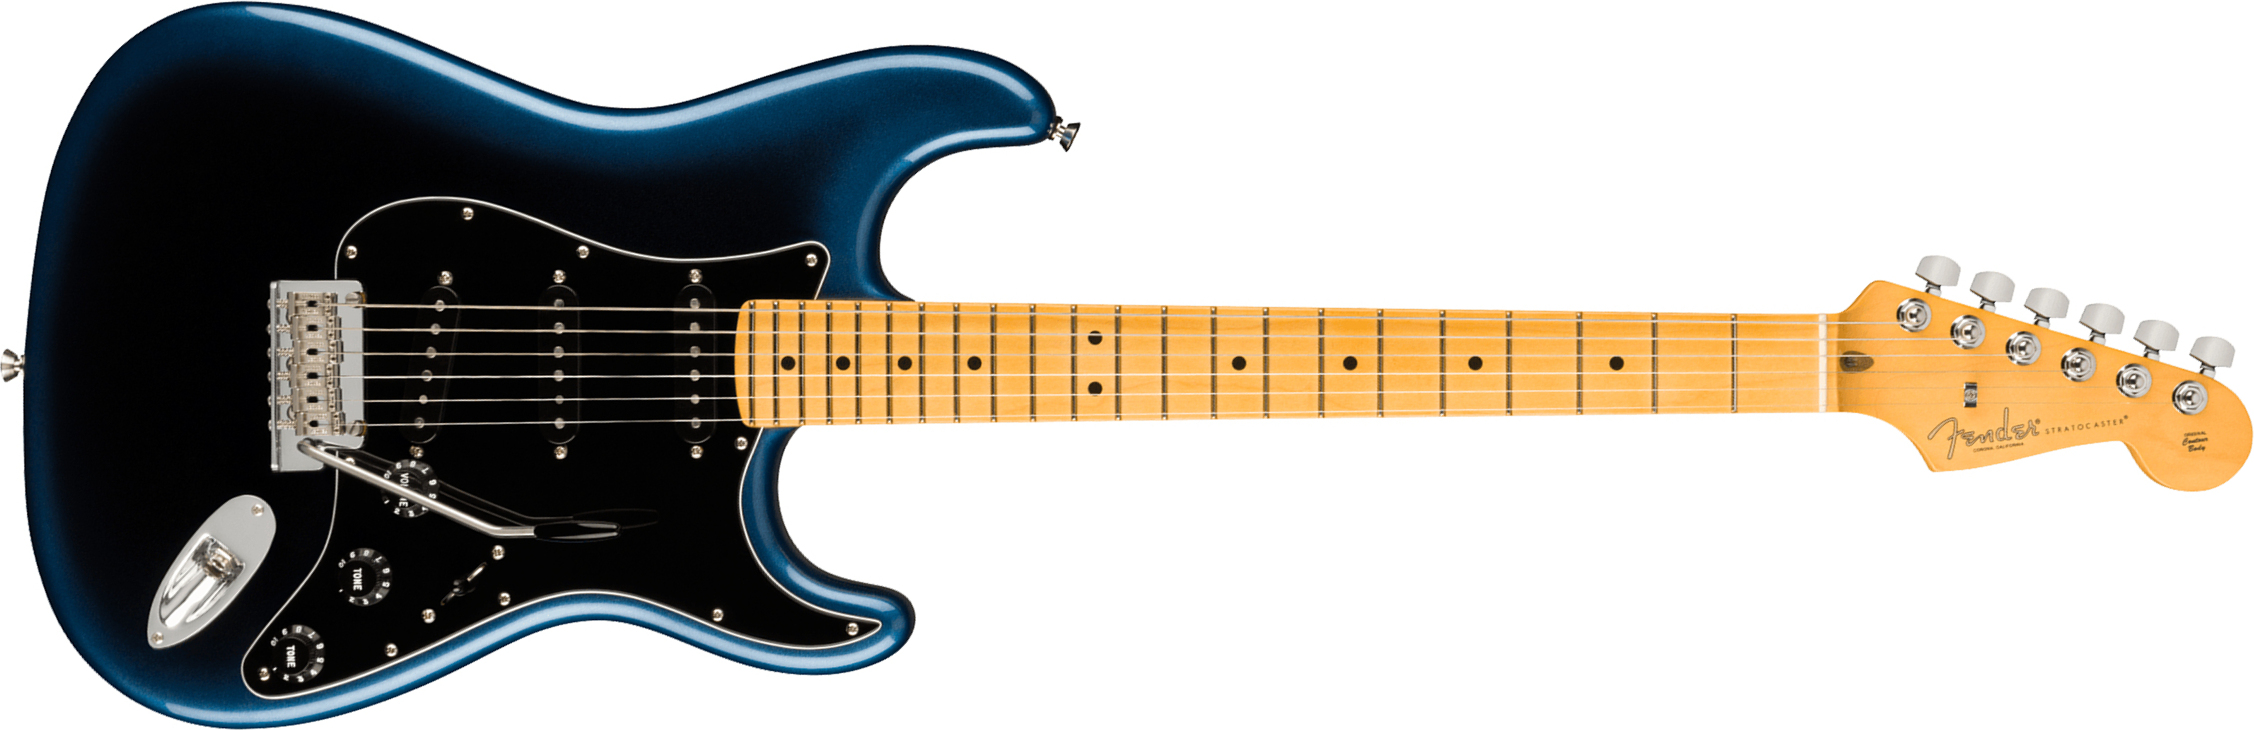 Fender Strat American Professional Ii Usa Mn - Dark Night - Str shape electric guitar - Main picture